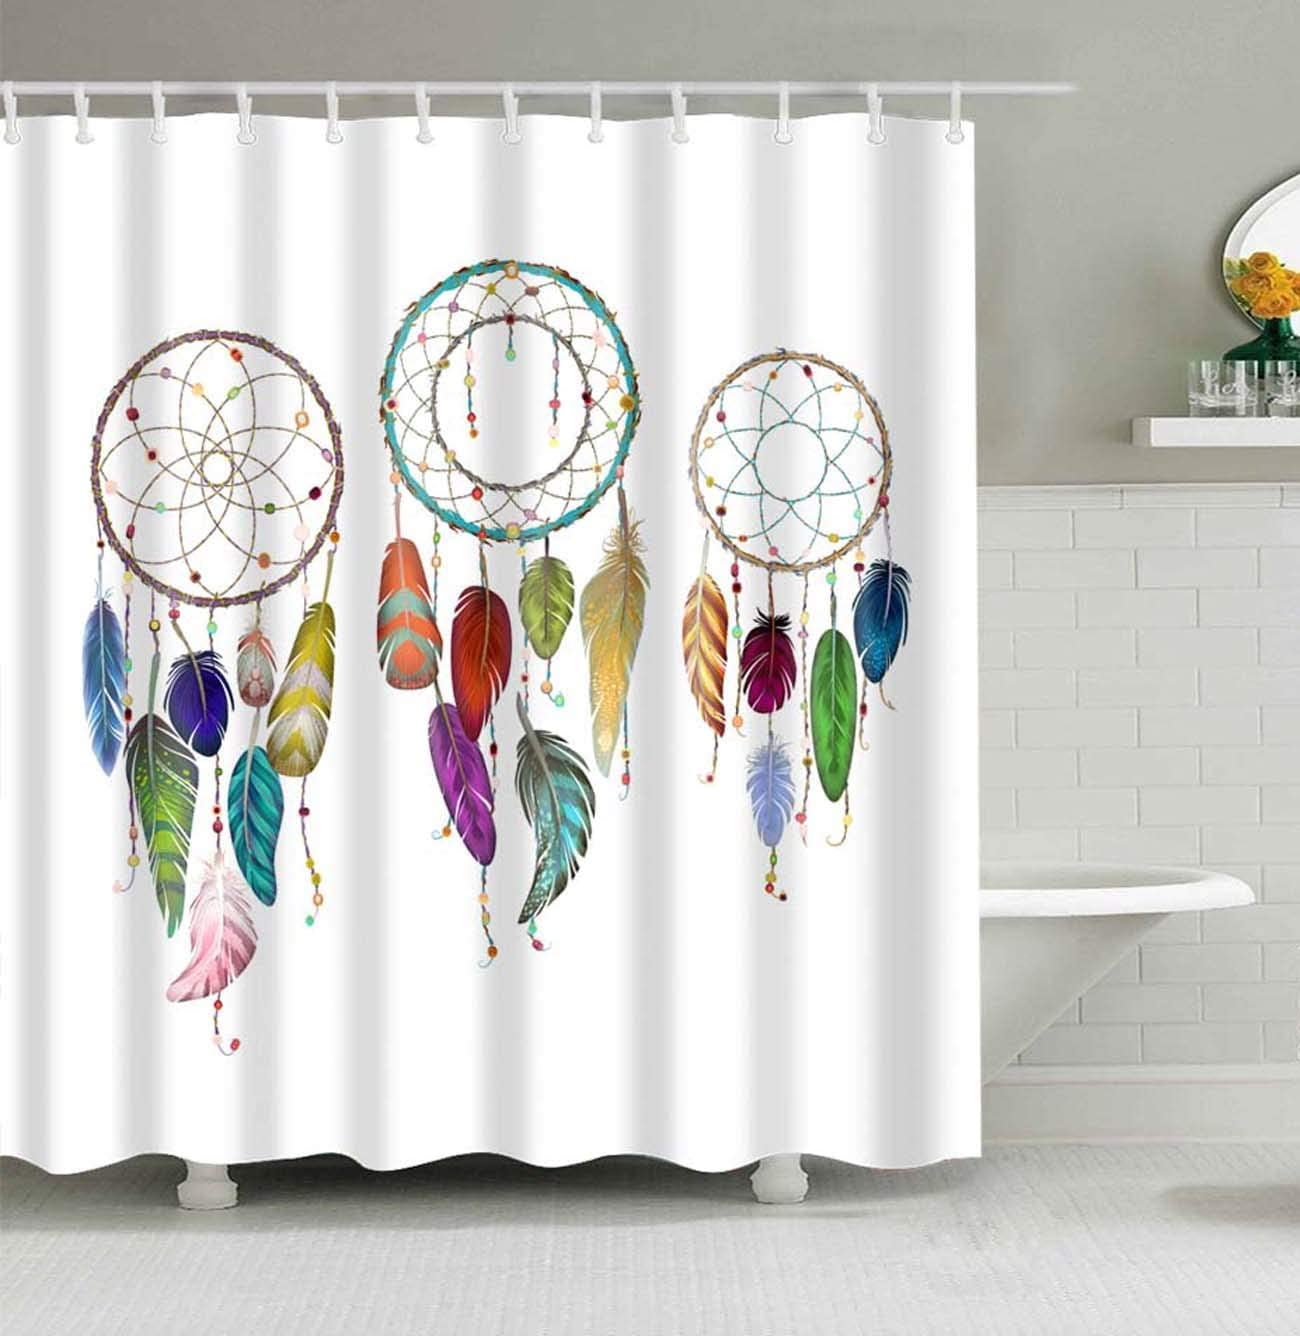 Dream Catcher Art Print Shower Curtain Bath Mat Toilet Cover Rug Bathroom Decor 